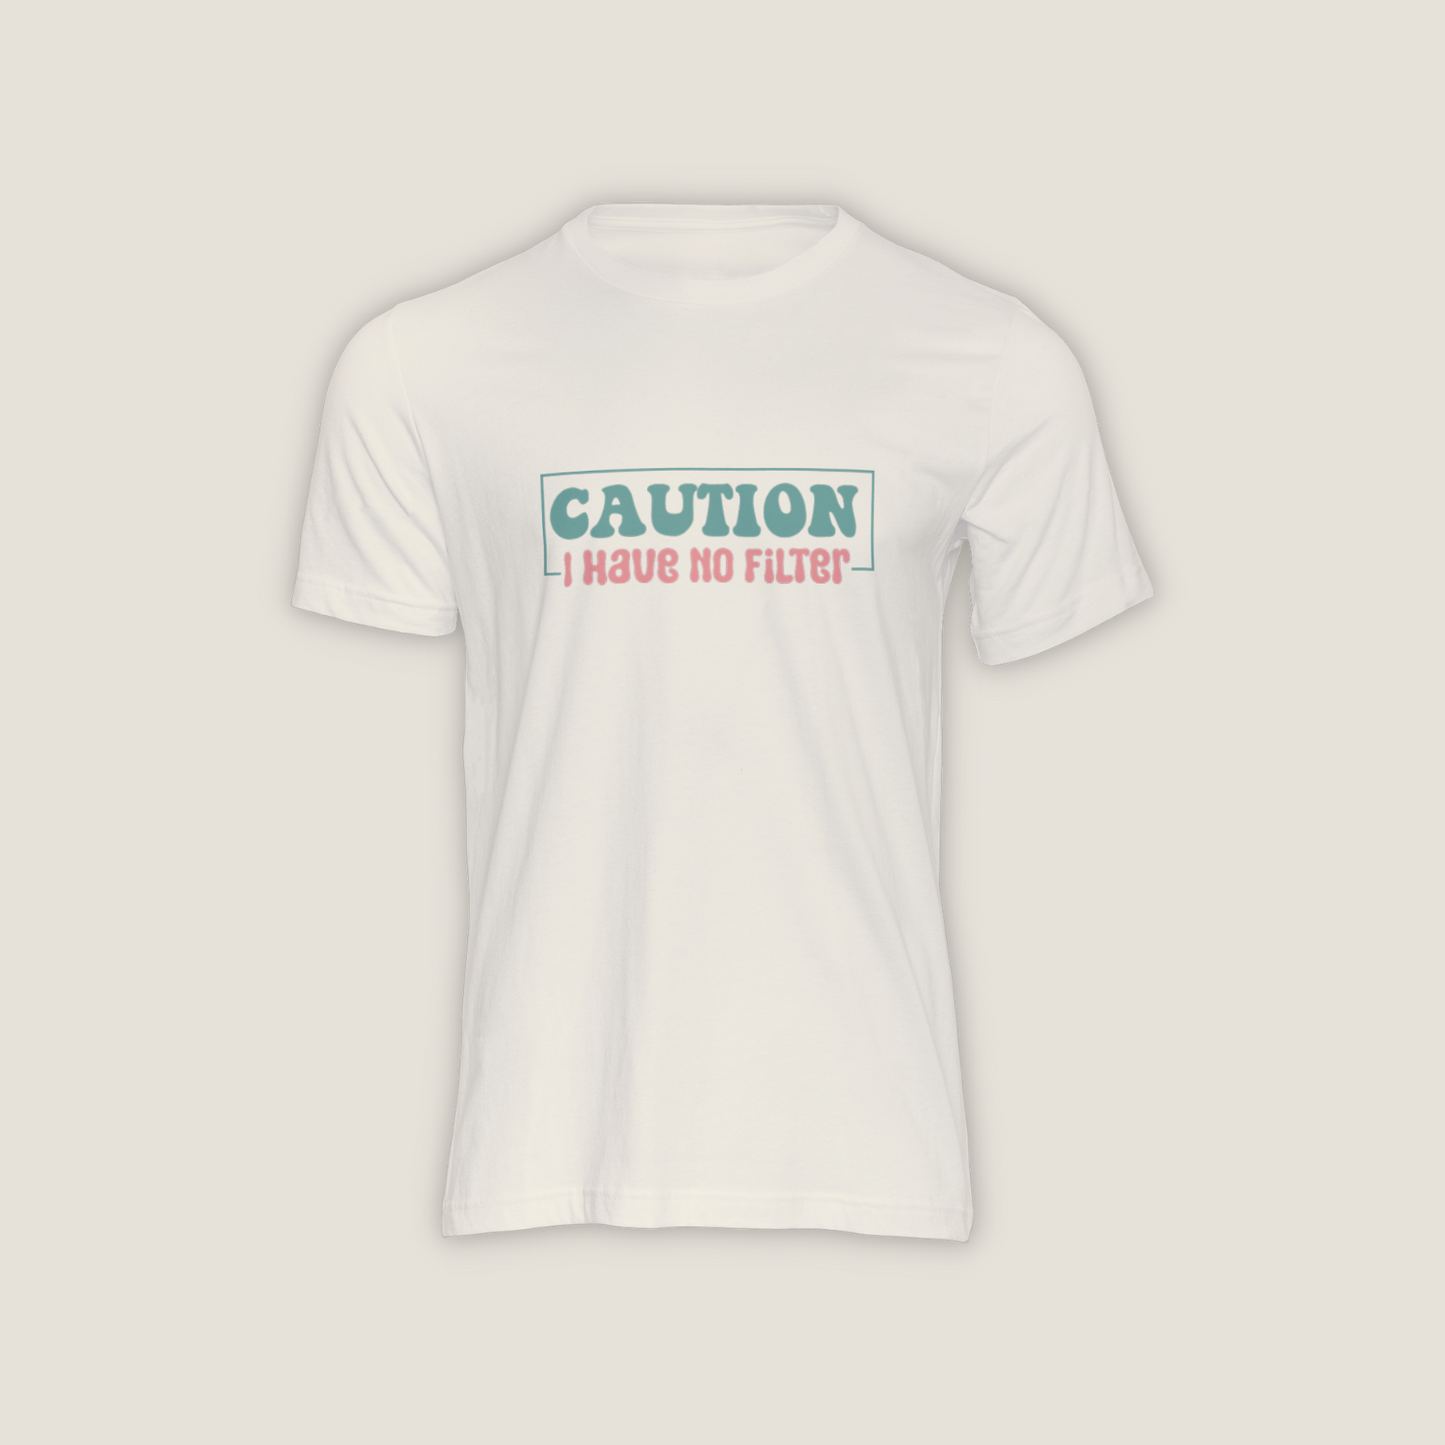 Caution I Have No Filter - Shirt